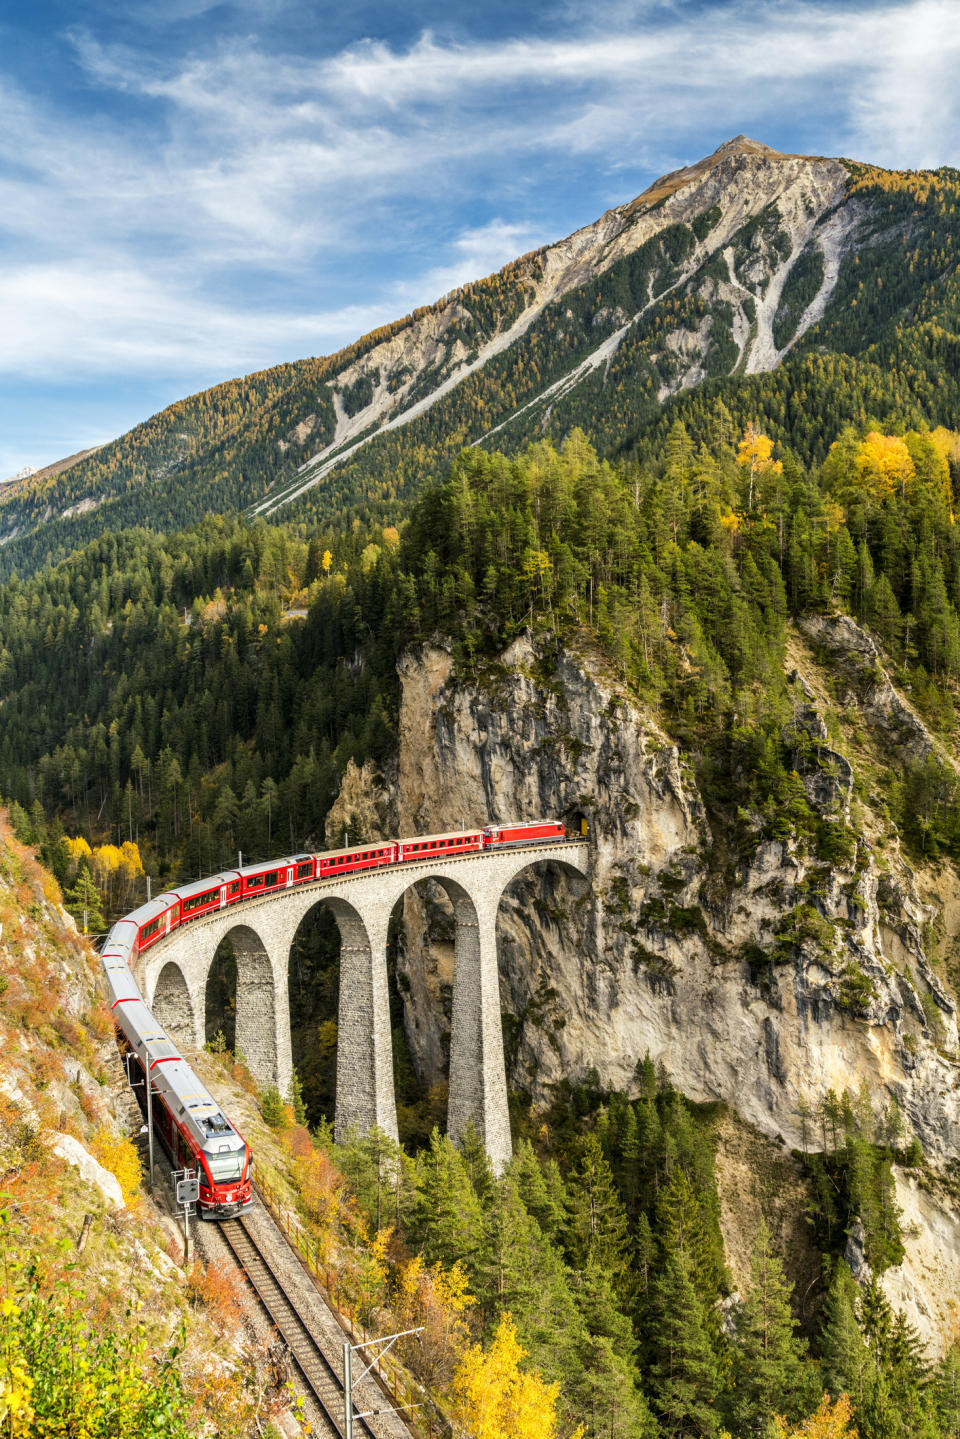 A train going through a scenic fall landscape.